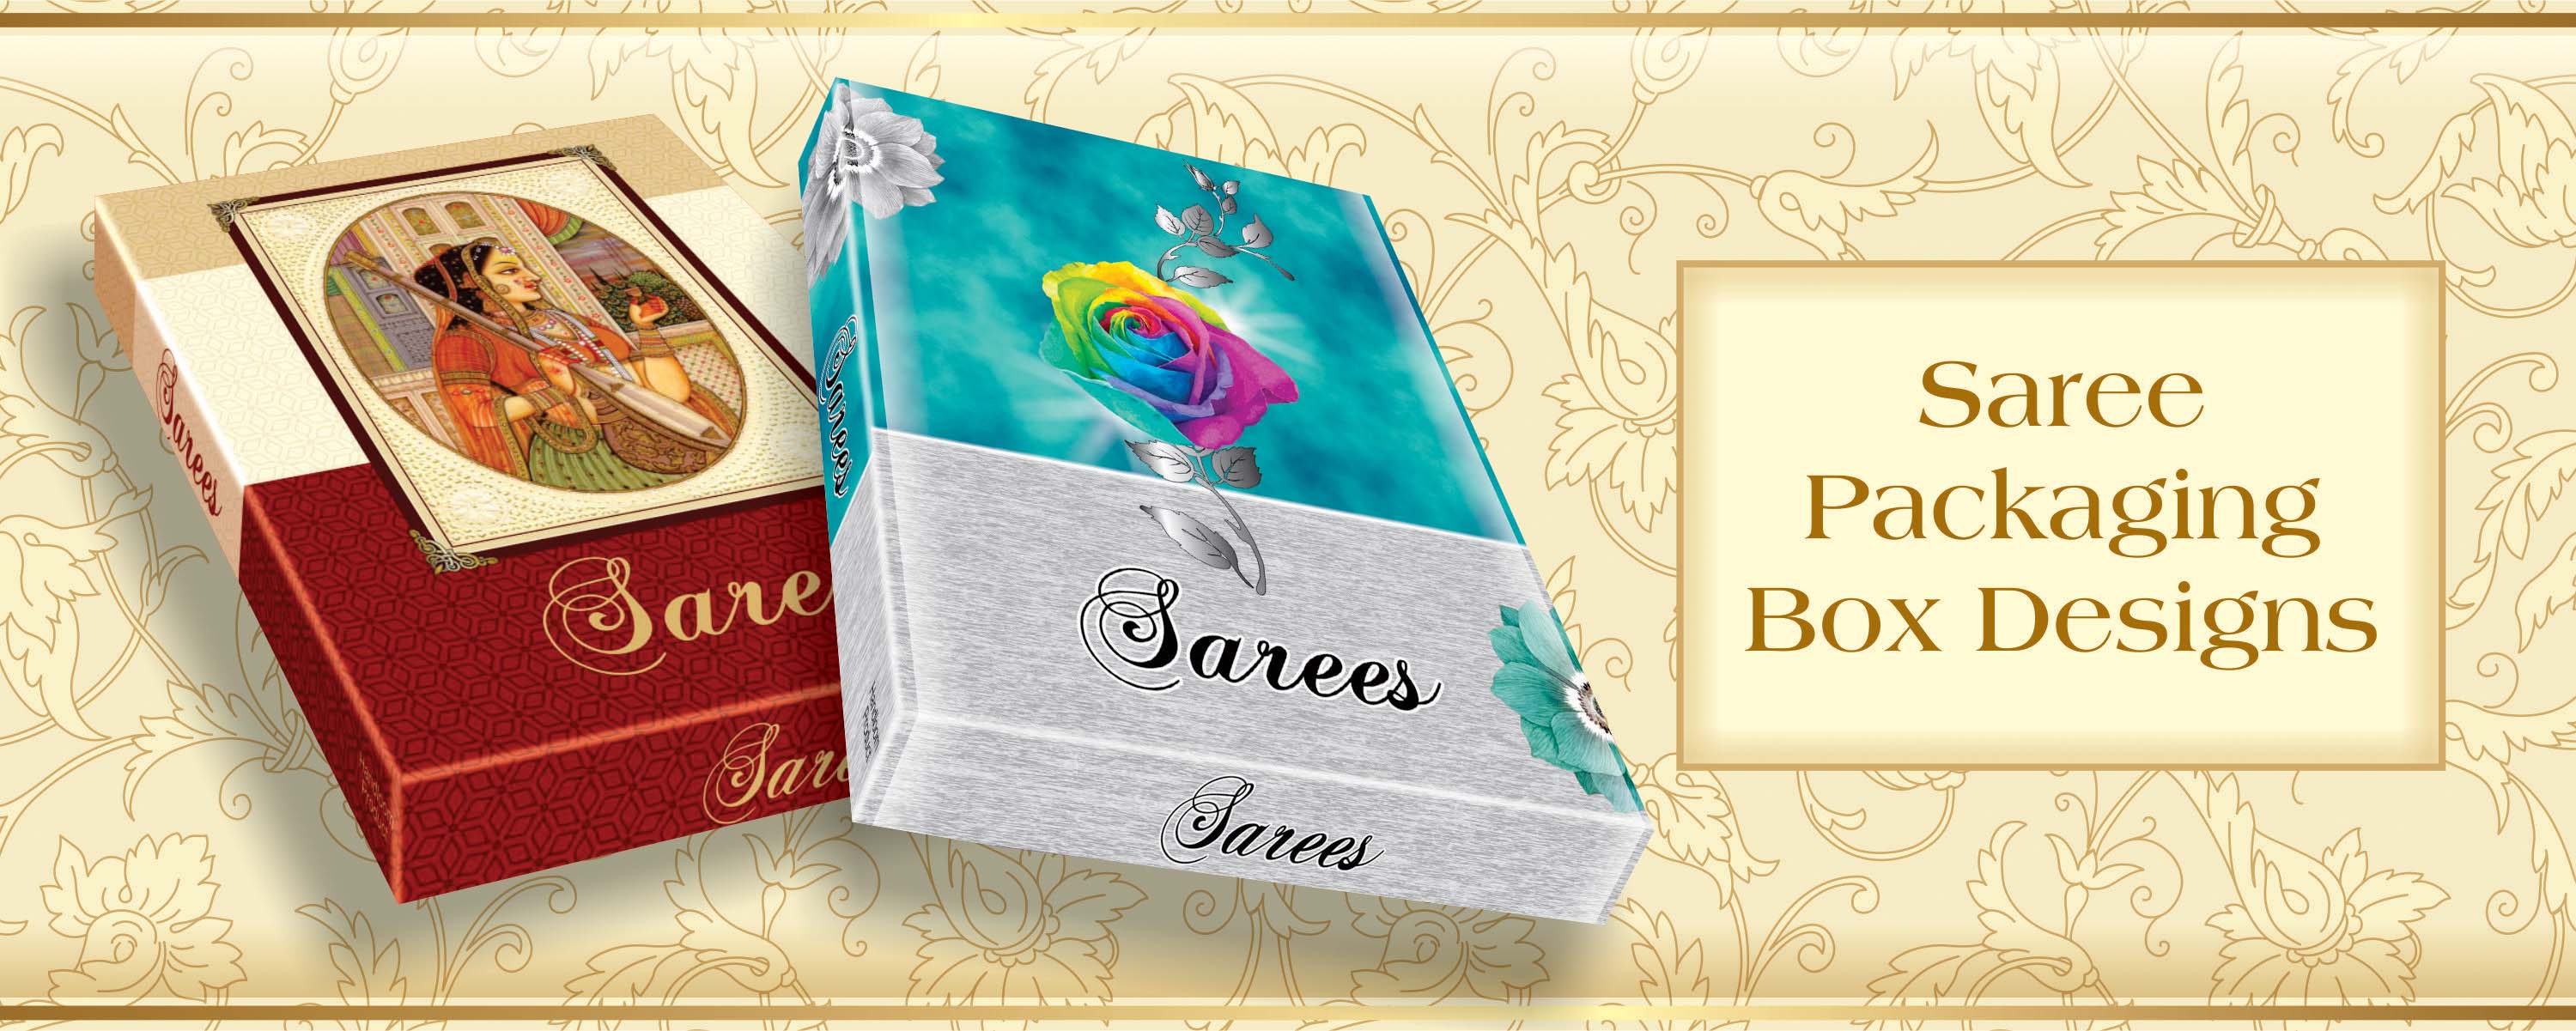 Saree Packaging Box Designs 1